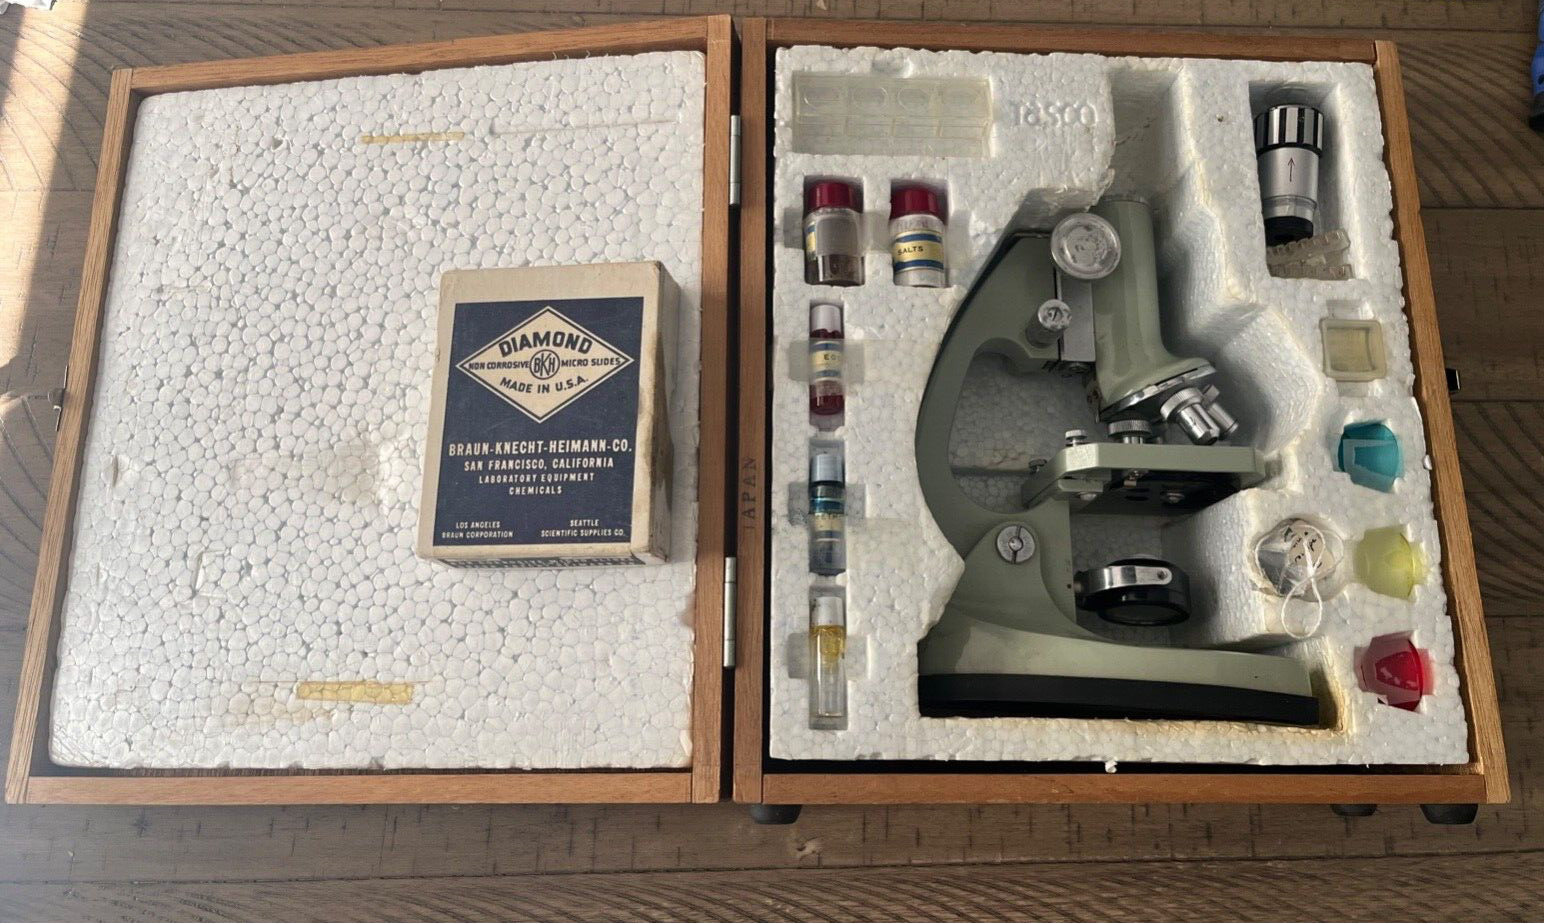 Vintage TASCO Deluxe High-Quality Microscope #981-5 w/Original Wood Case